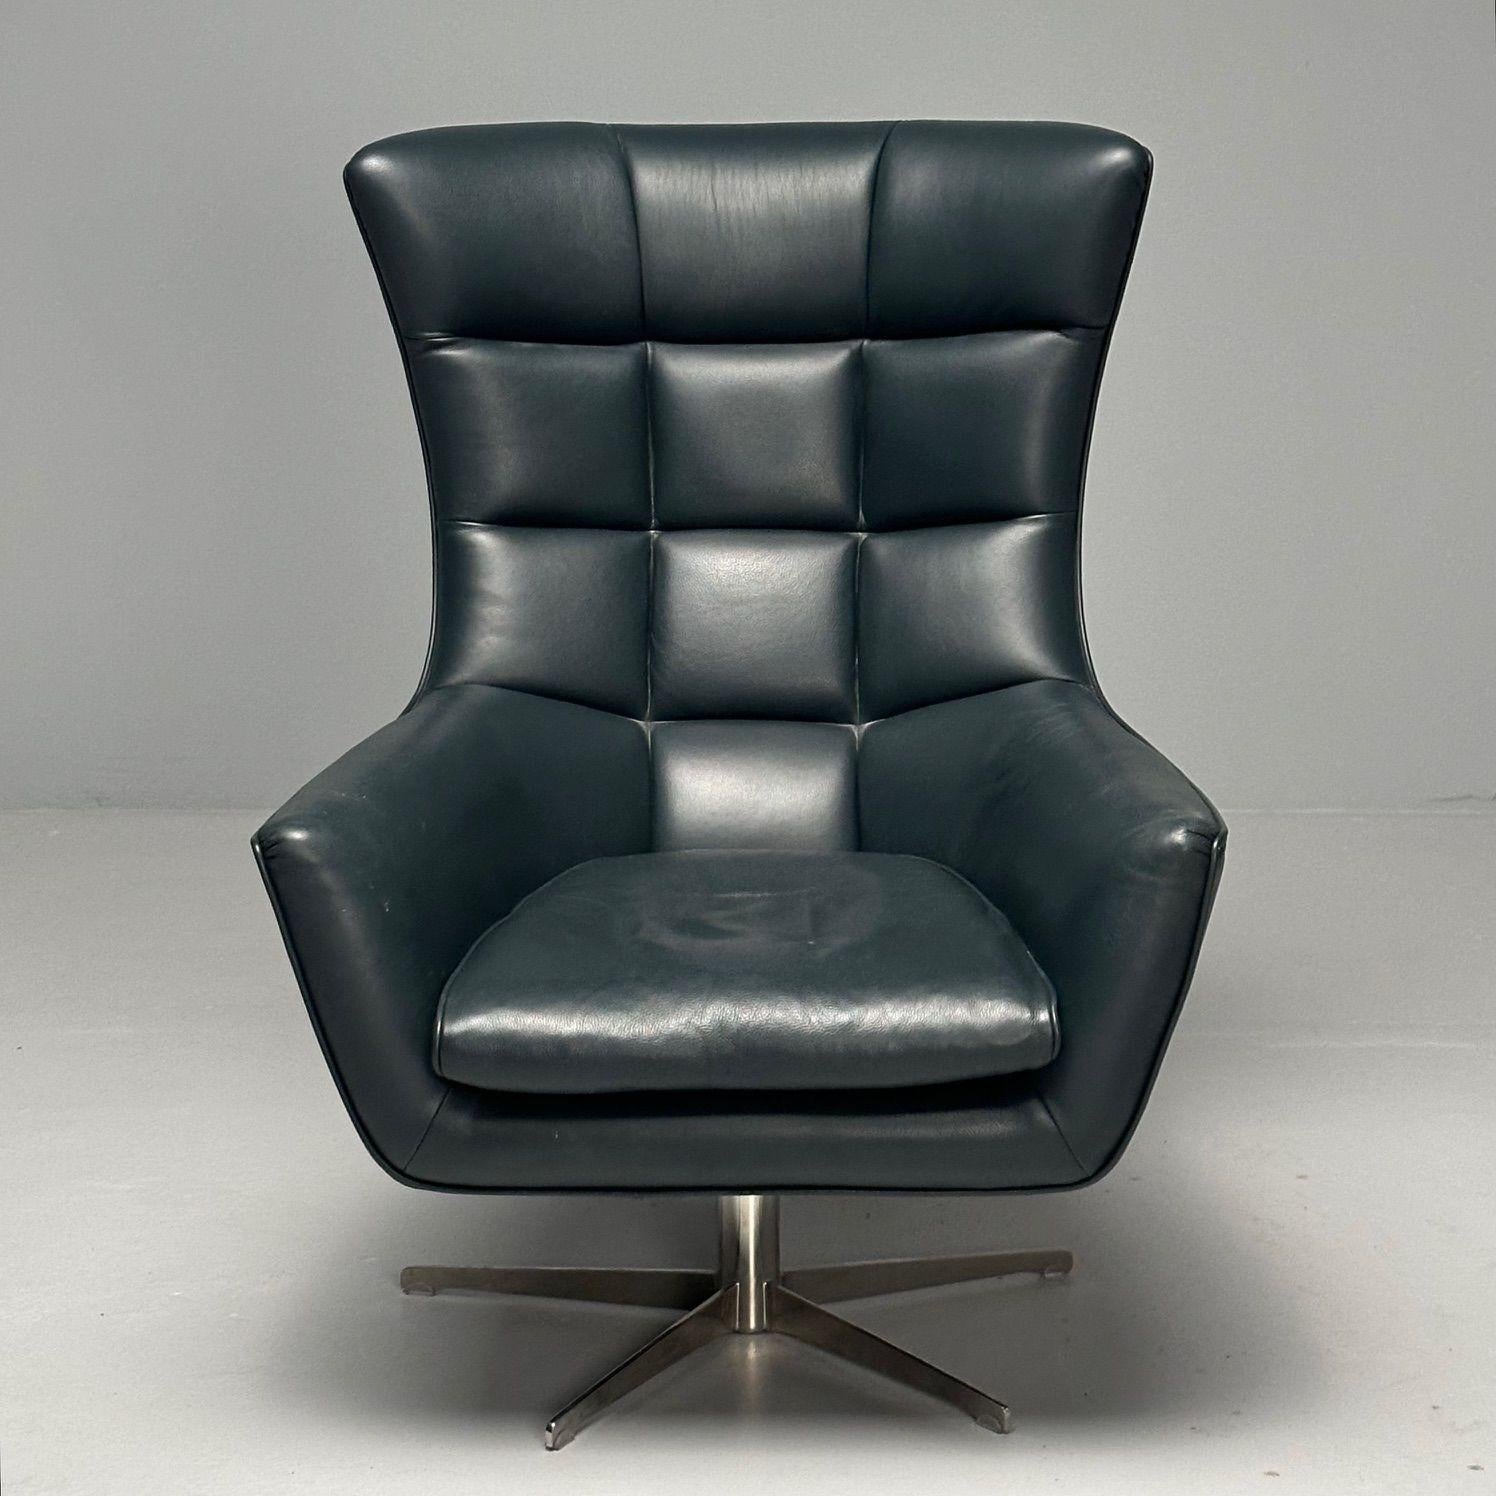 Italian Giuseppe Nicoletti, Modern, Office Chair, Blue Leather, Stainless Steel, 2010s